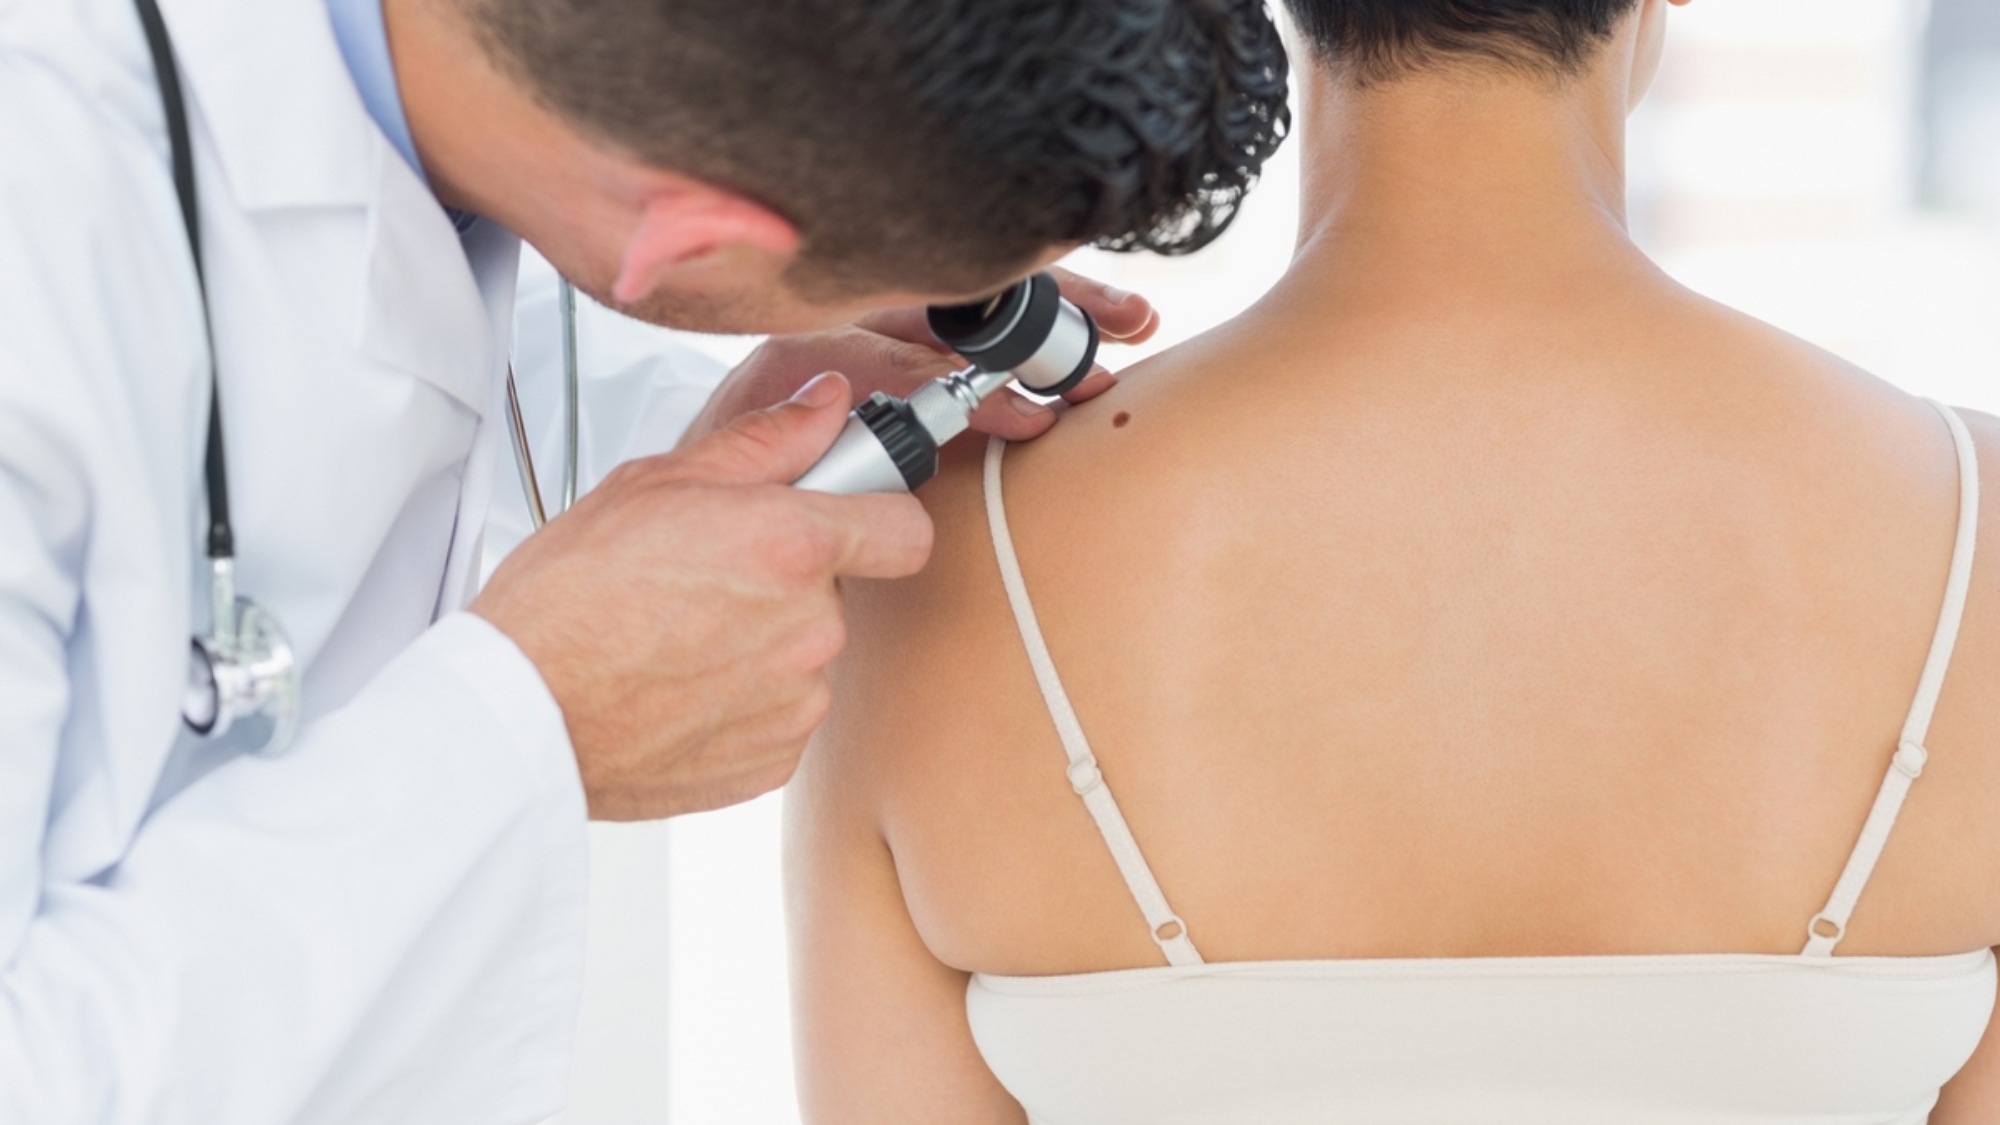 Dermatologist examining mole on back of woman